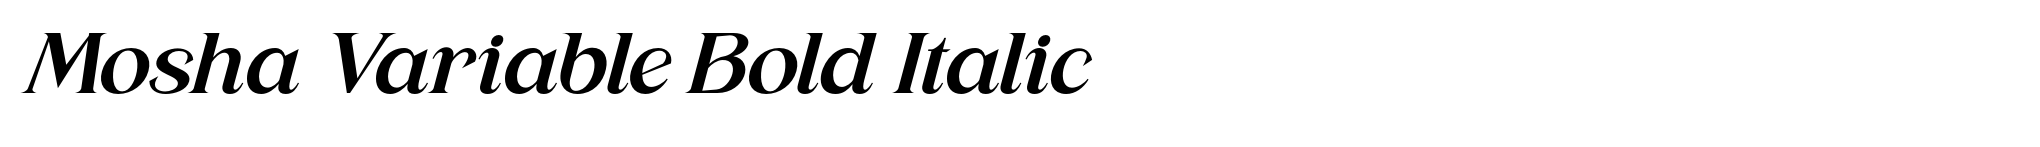 Mosha Variable Bold Italic image